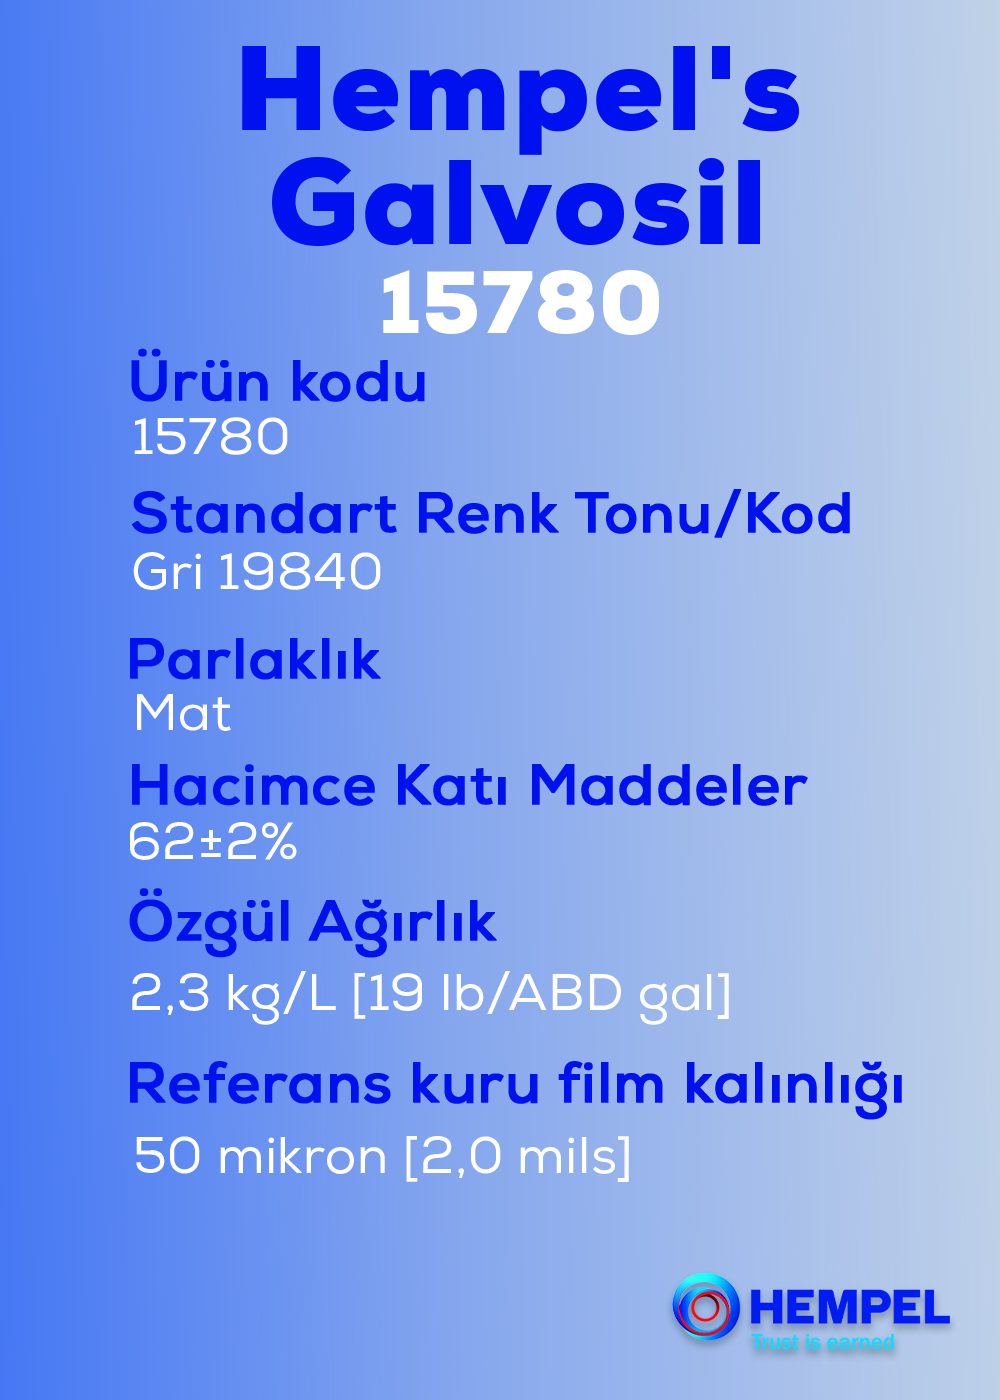 Hempel's Galvosil 15780